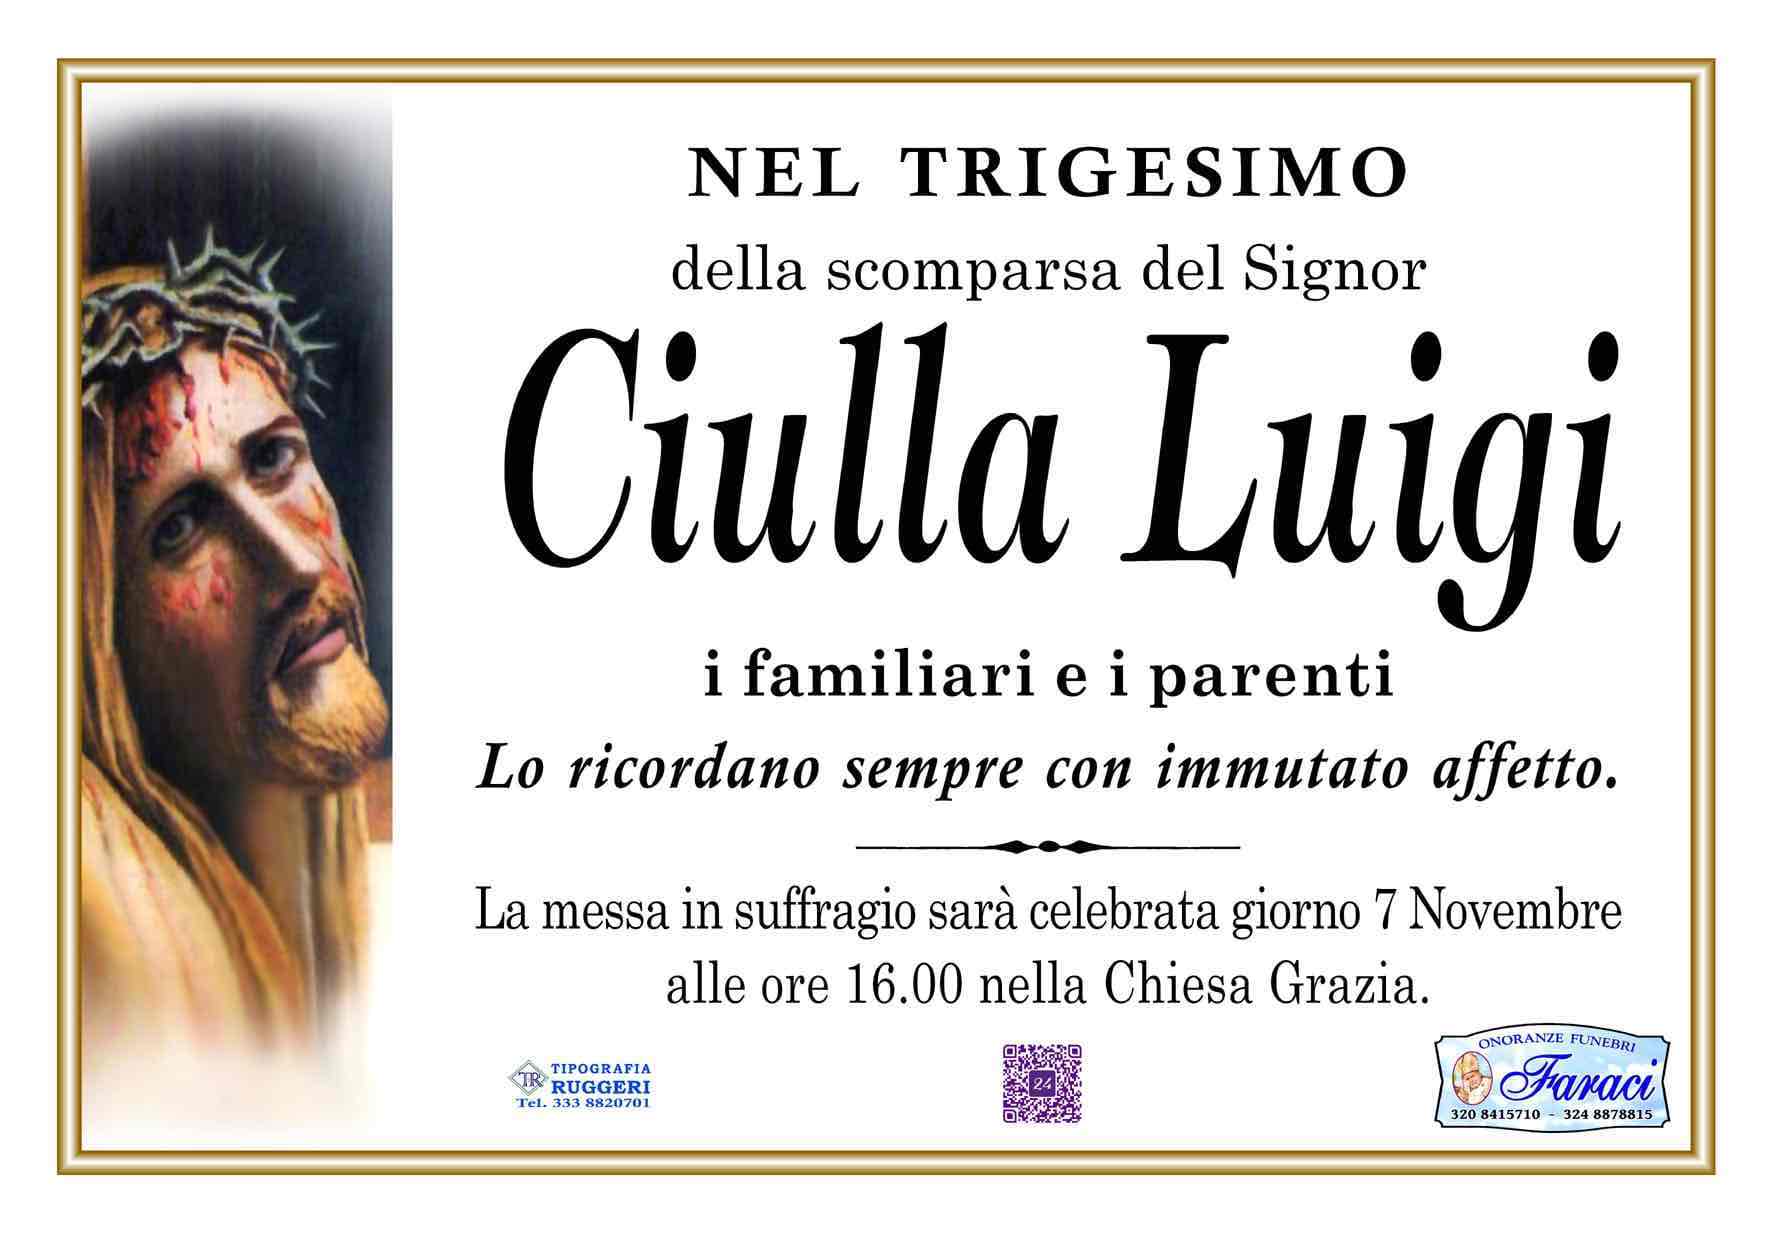 Luigi Ciulla